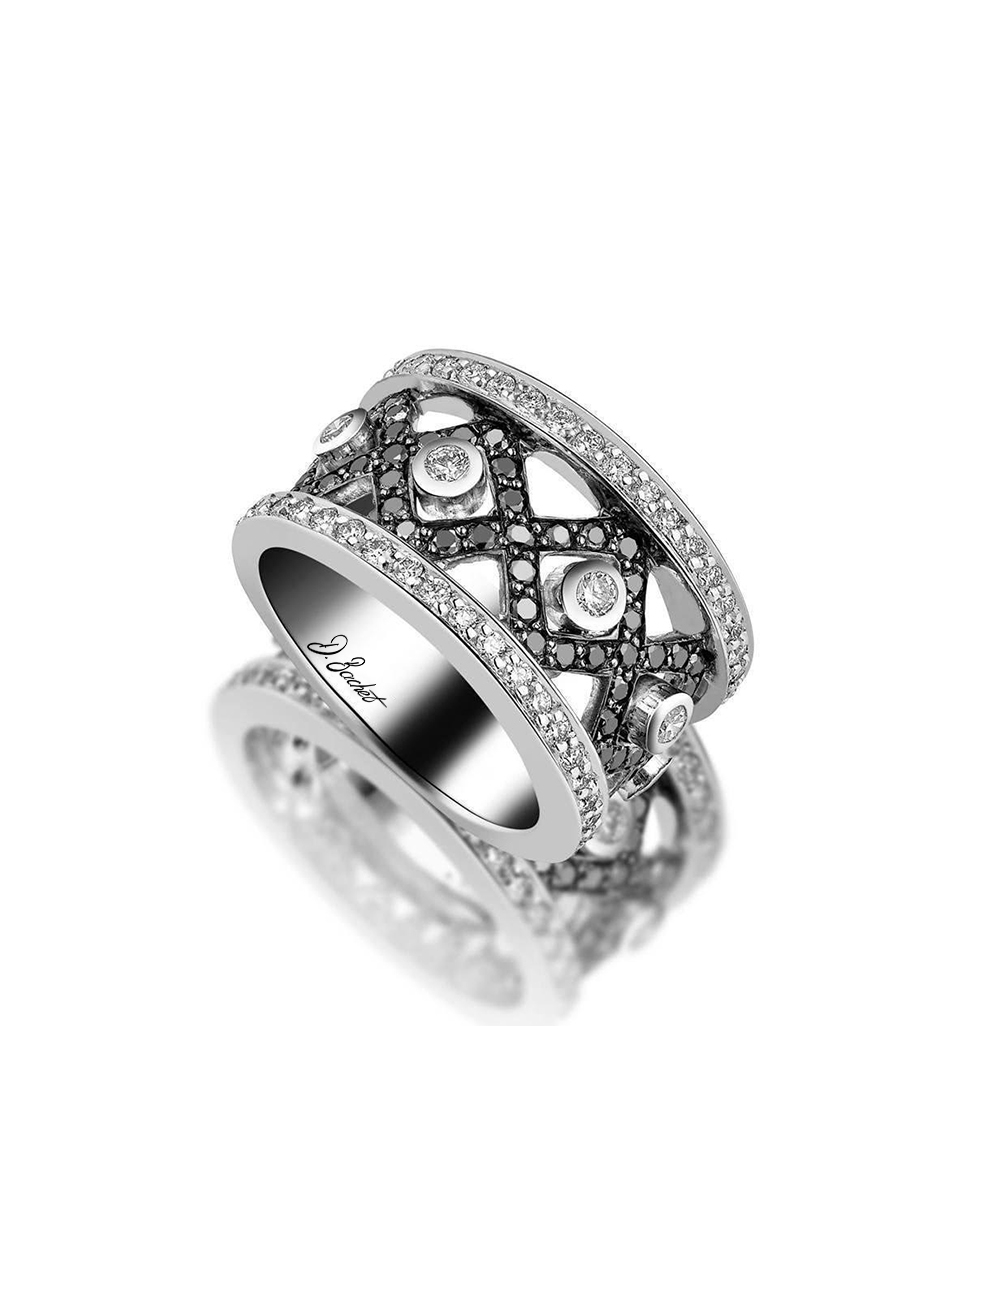 Elegant platinum ring with black and white diamonds, symbolizing innovation and modern elegance.